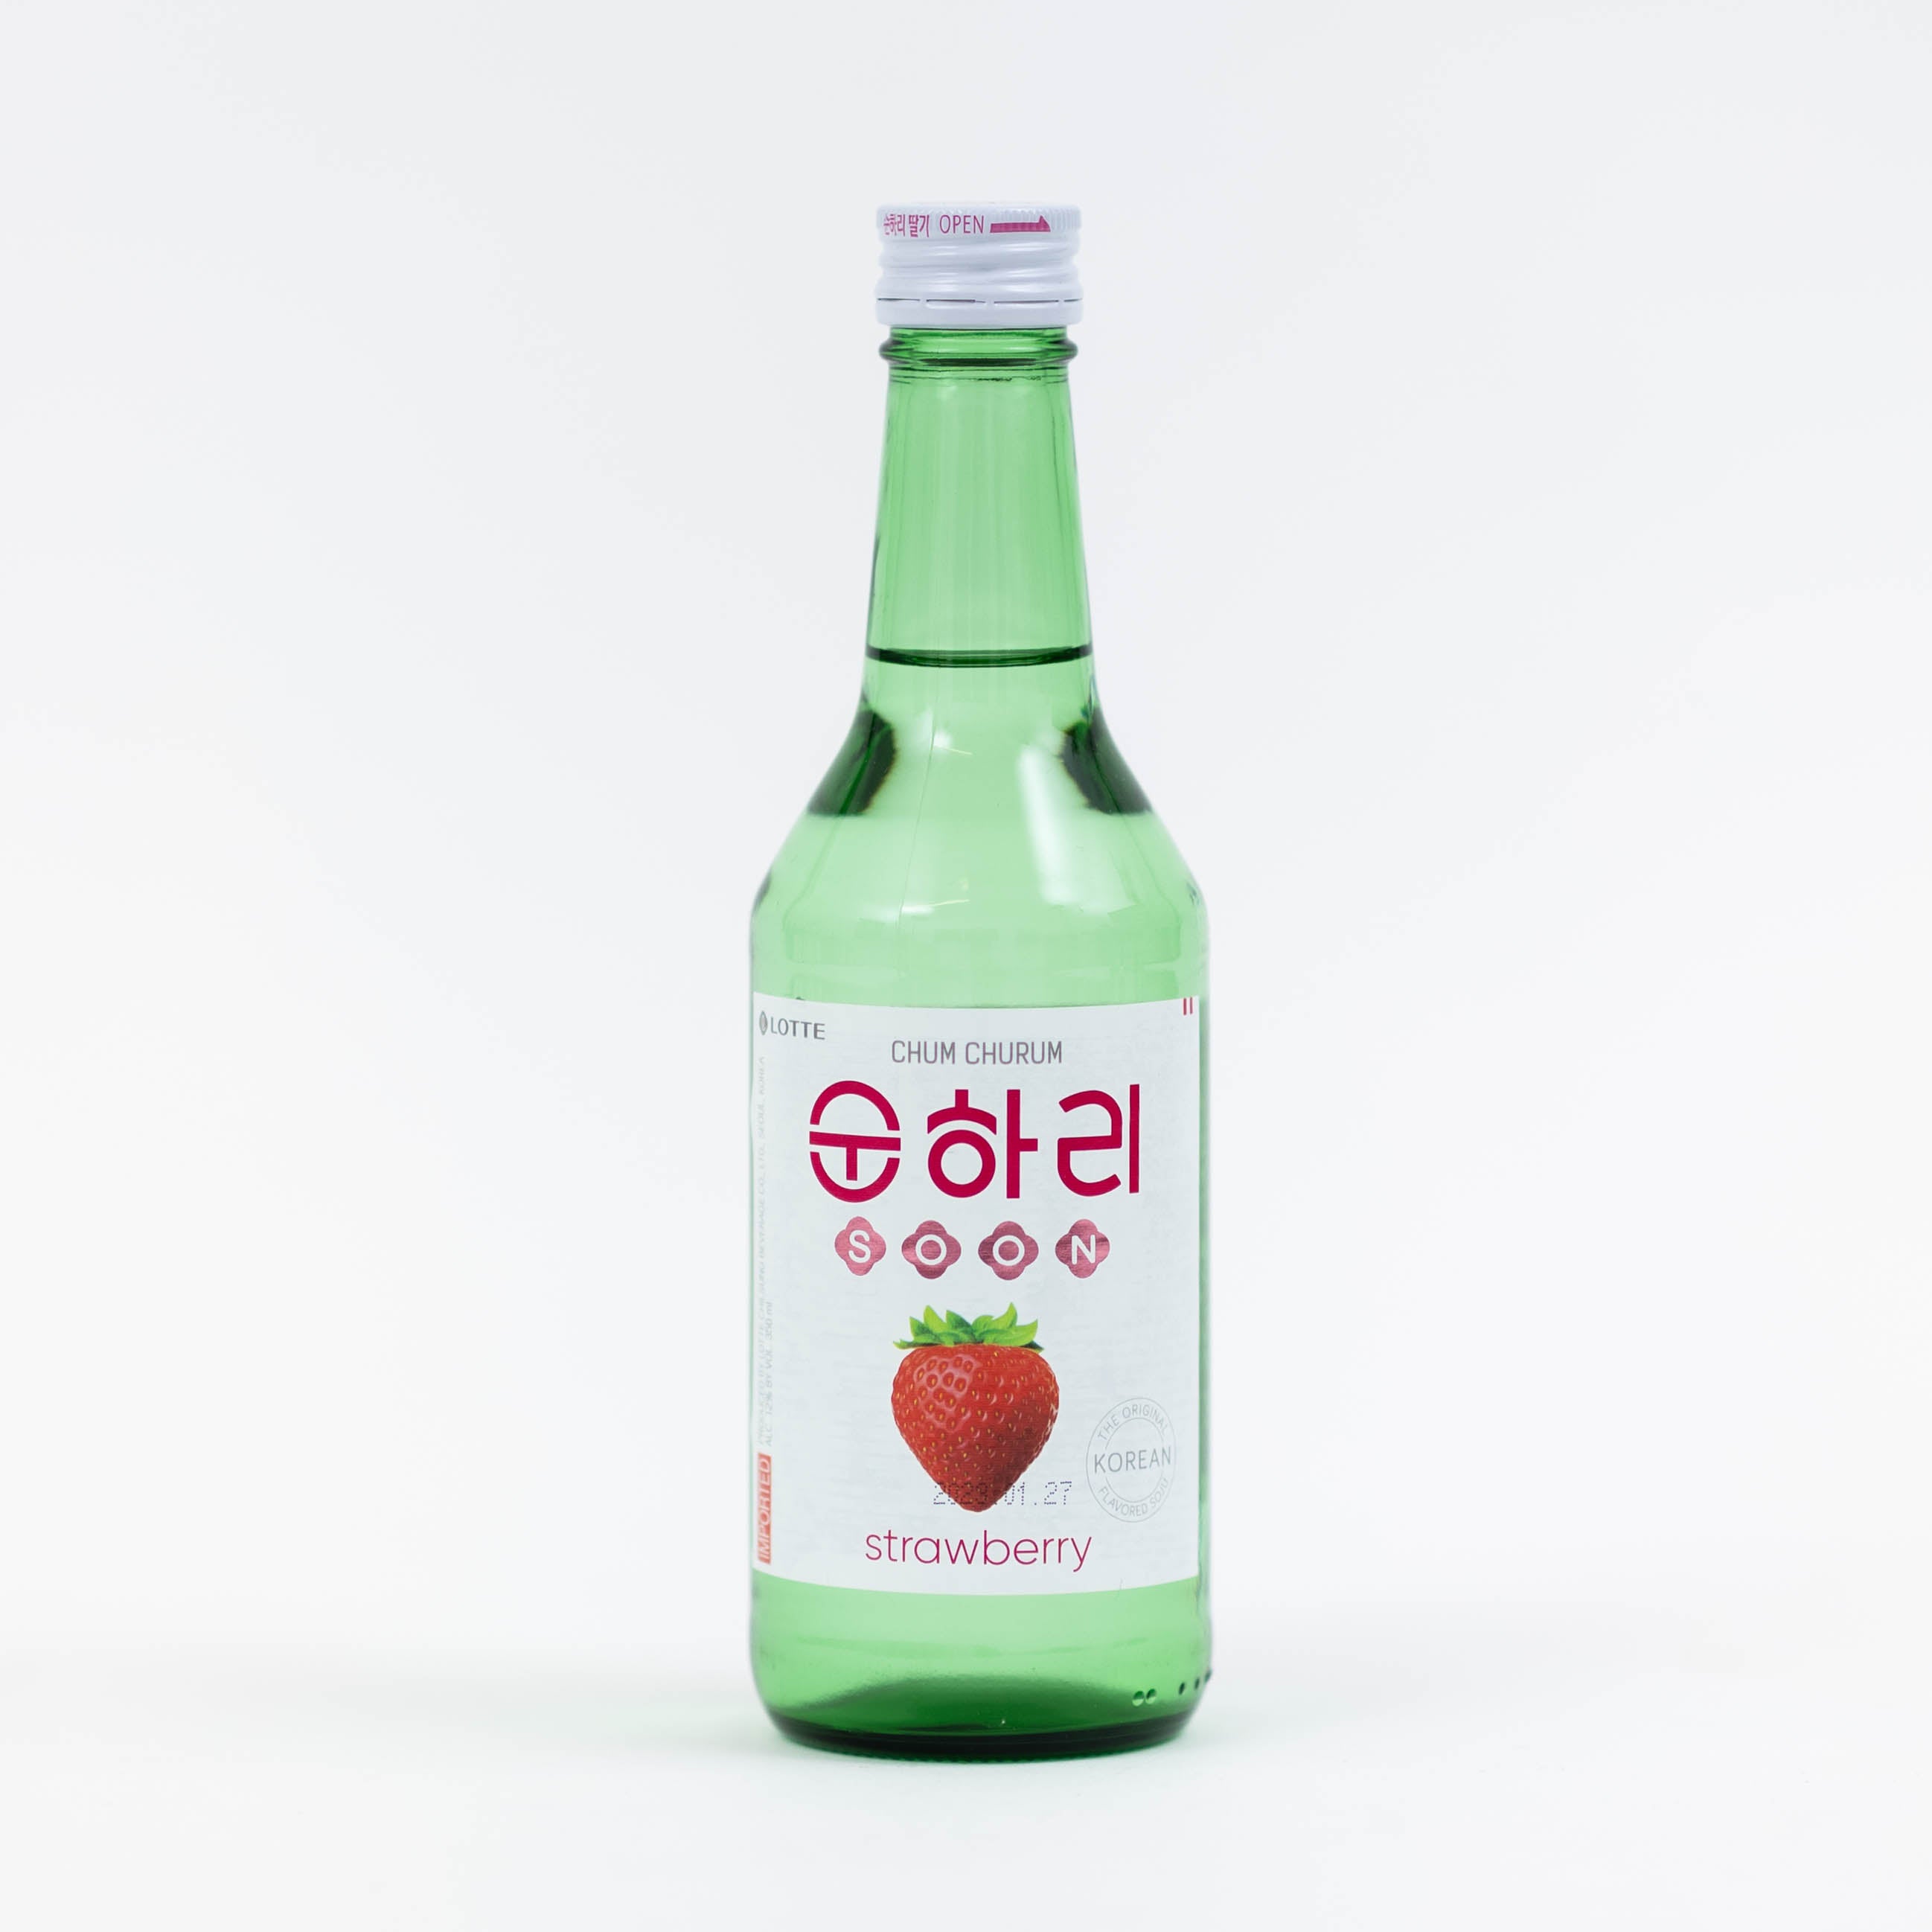 soju lotte strawberry erdbeere chum churum dinese.de onlineshop asiatische getränke drinks alkohol koreanisch asiashop asia shop